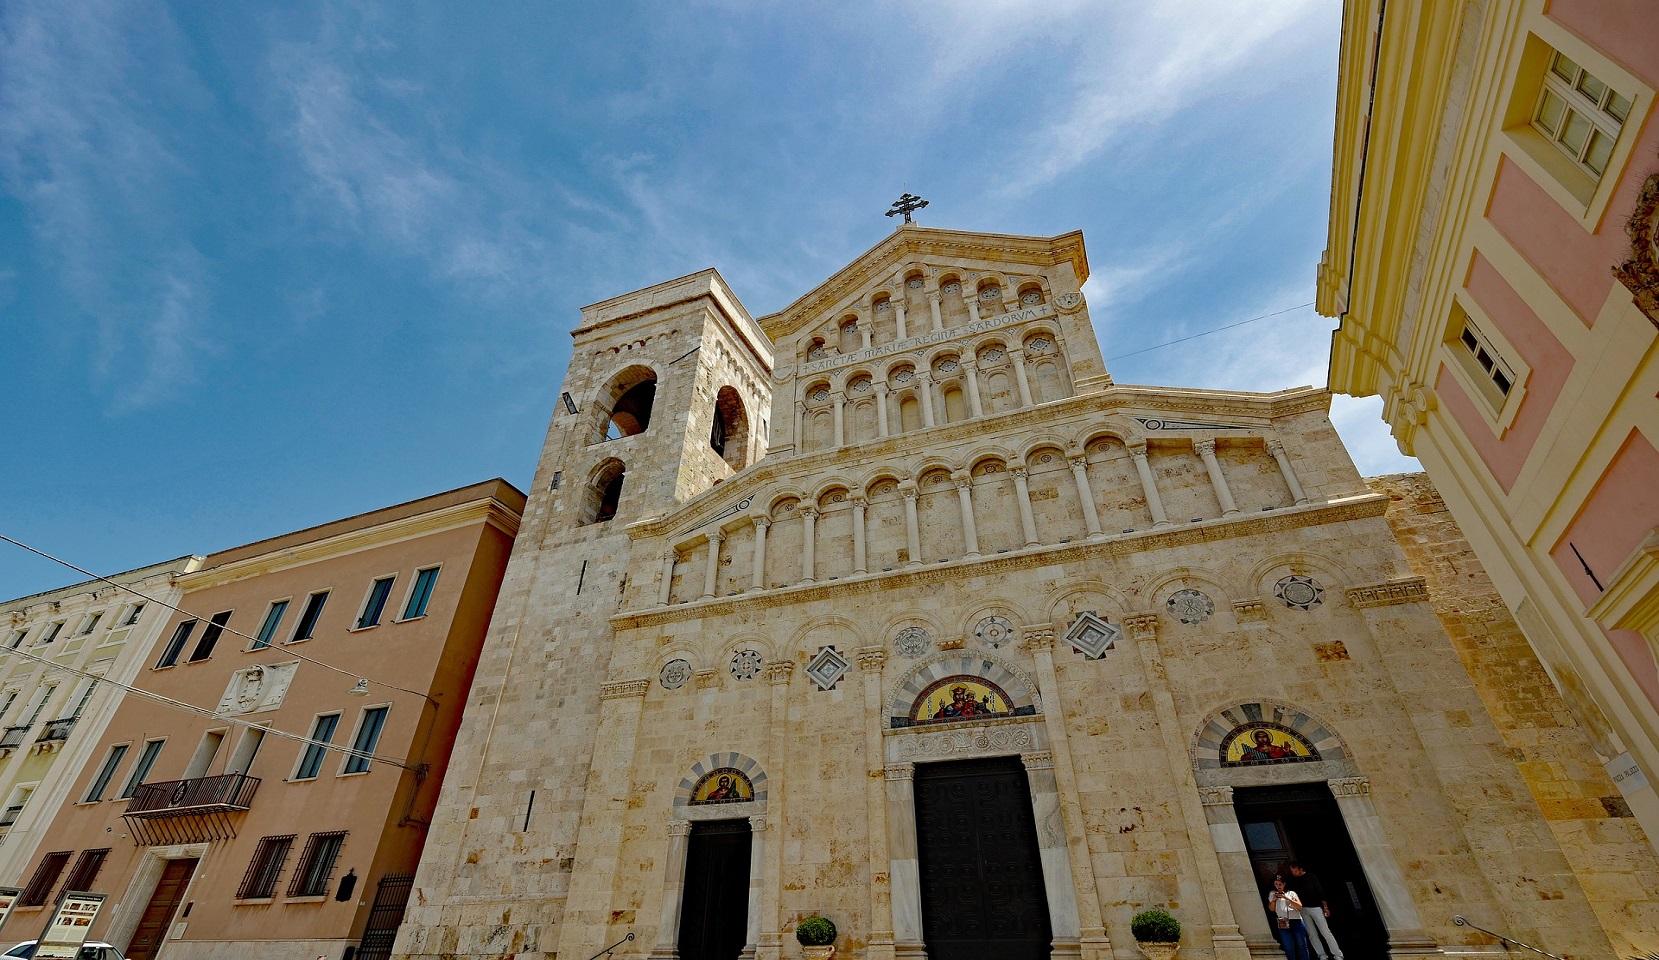 Duomo - Cathedral of Santa Maria Assunta and Santa Cecilia